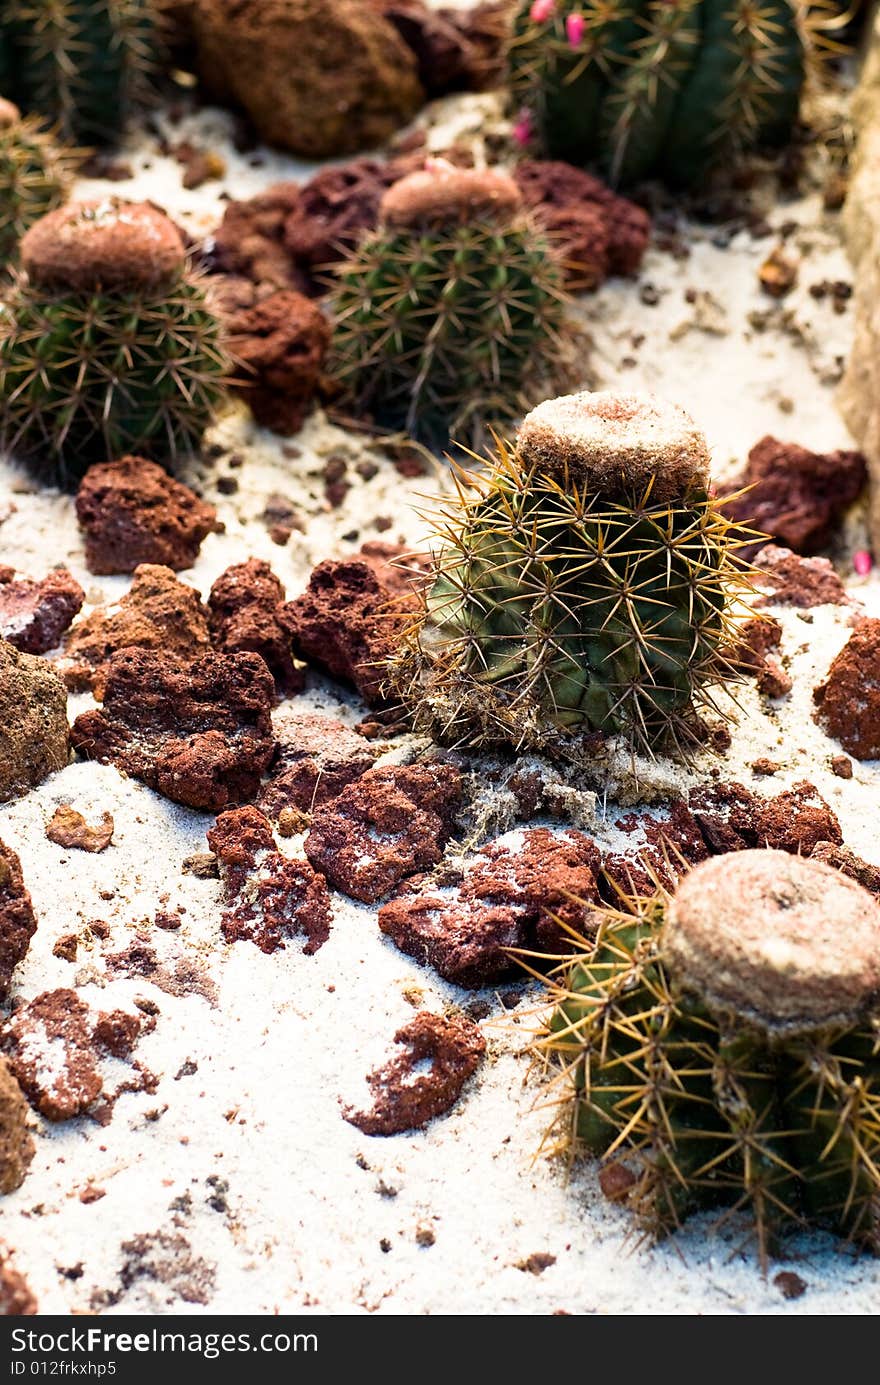 Barrel Cactus with sand and stones around in wild Mexico desert